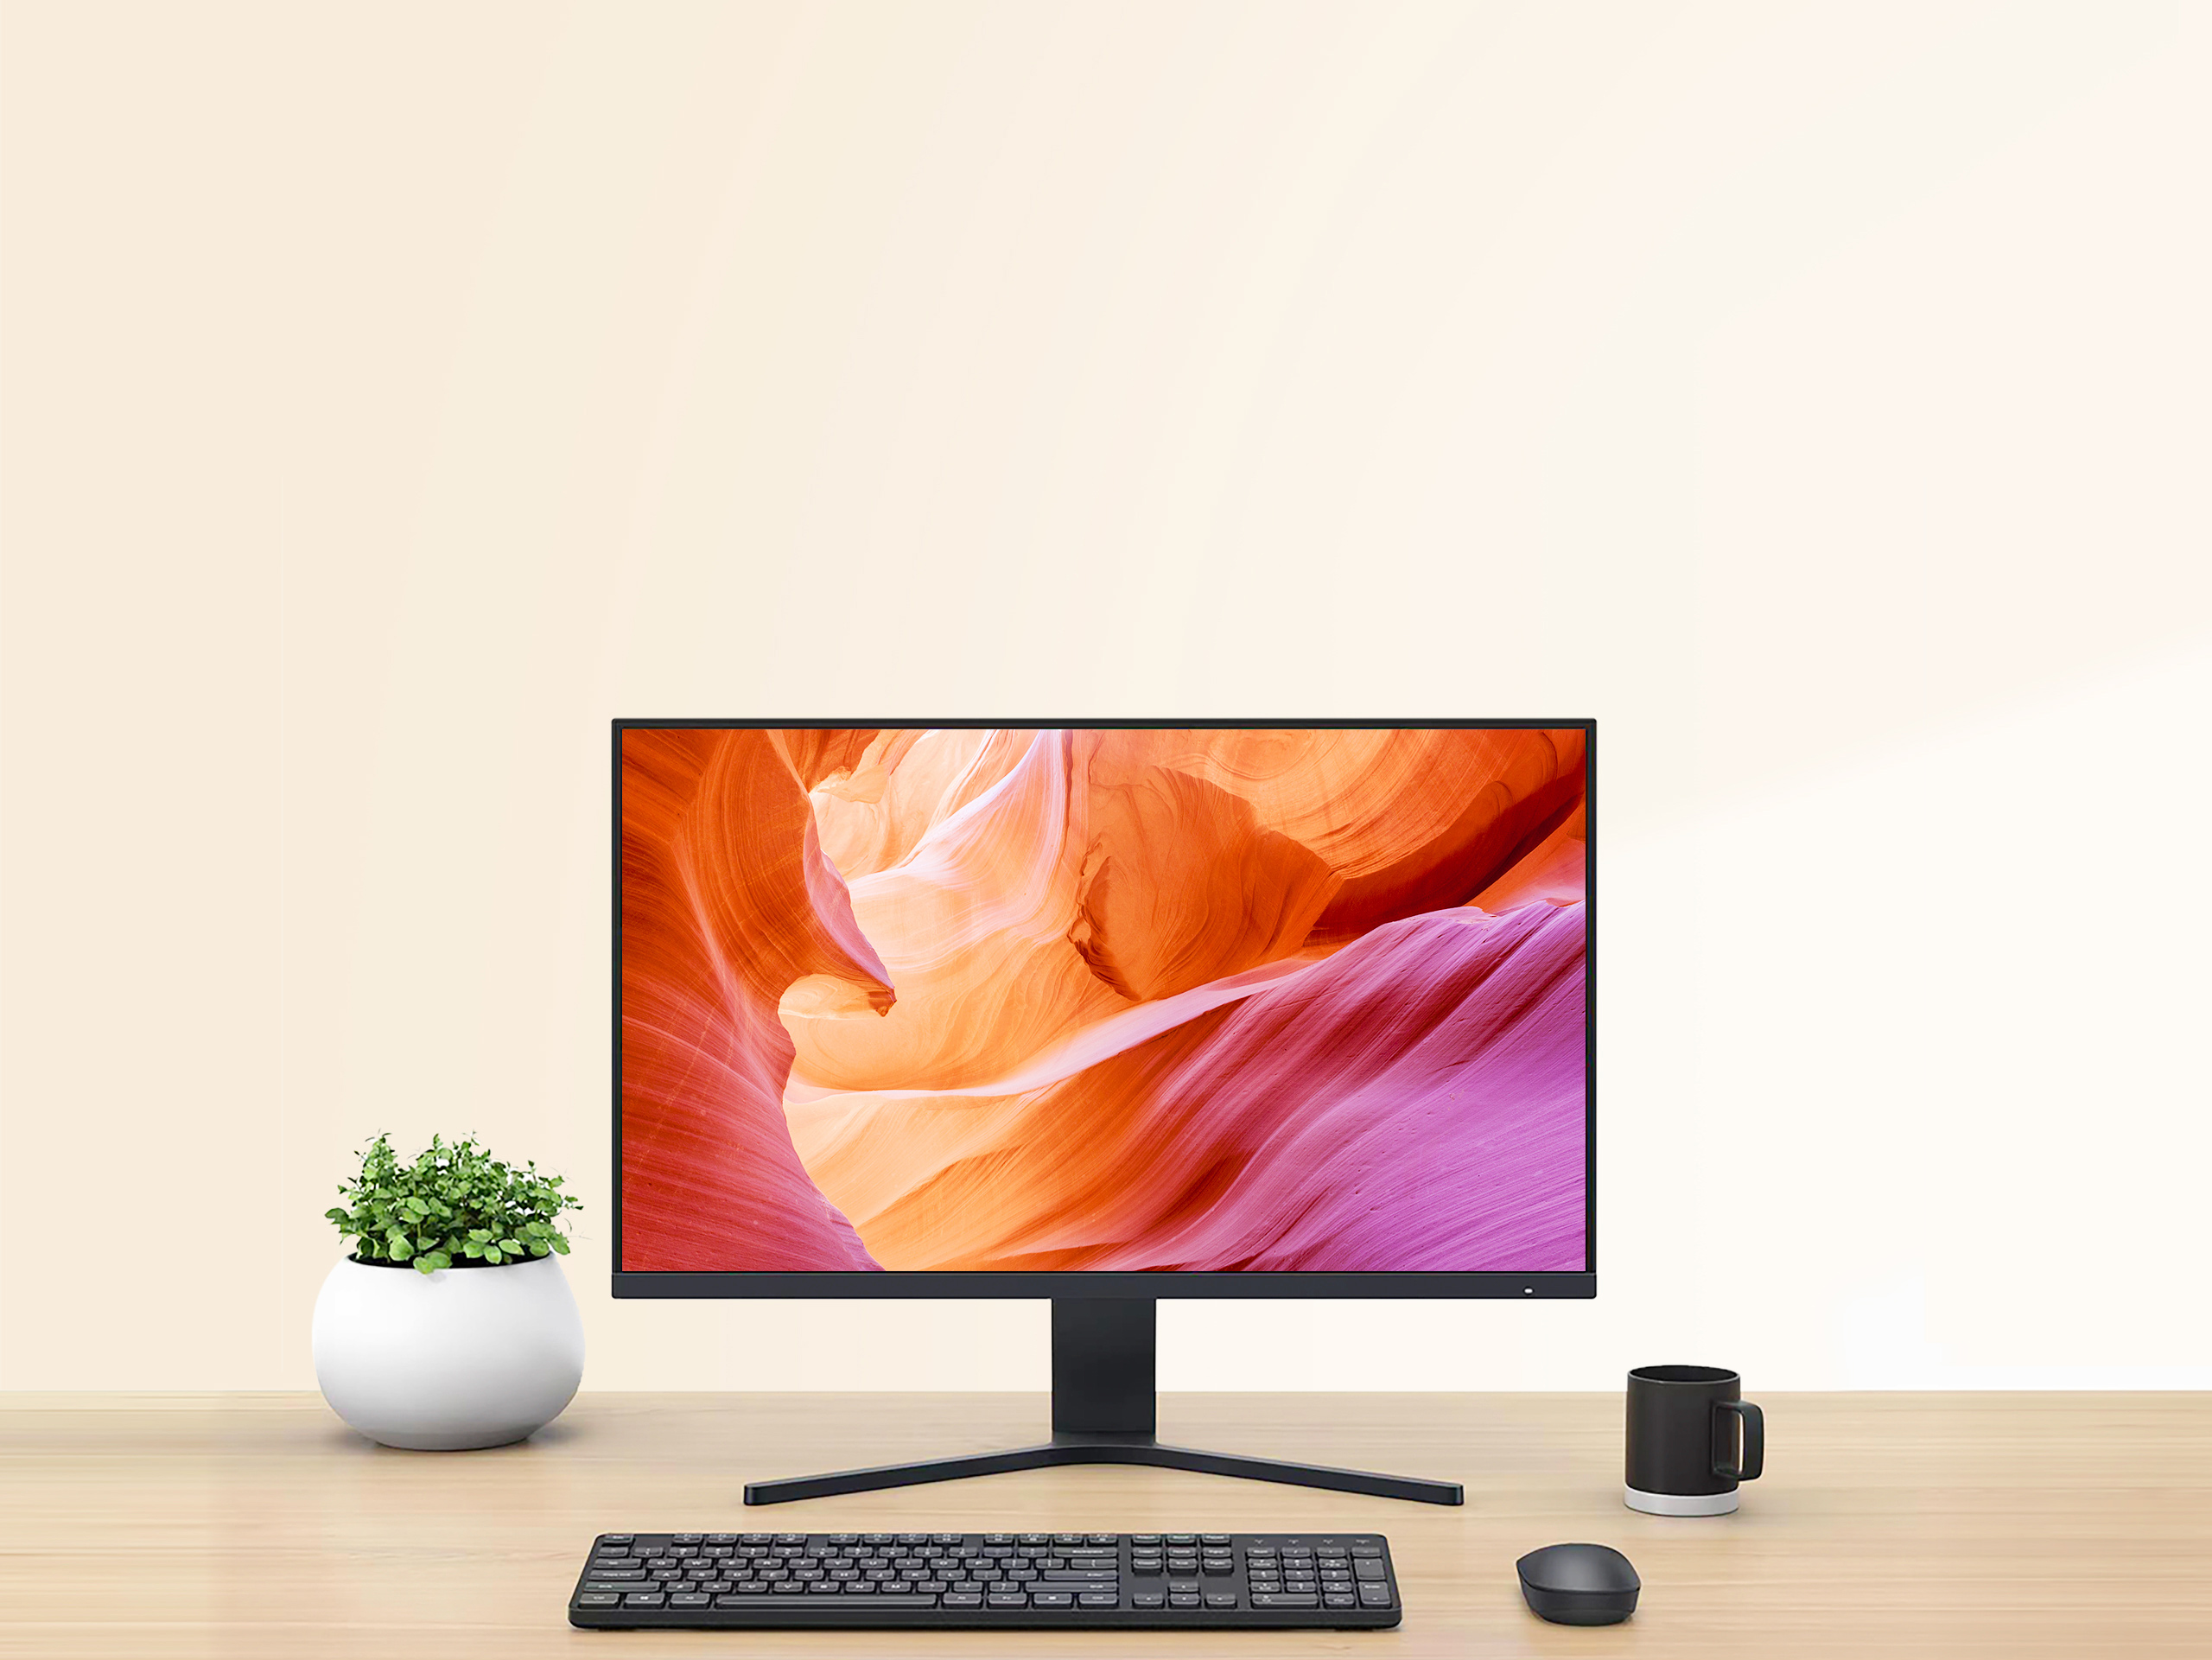 Mi Desktop Monitor 27